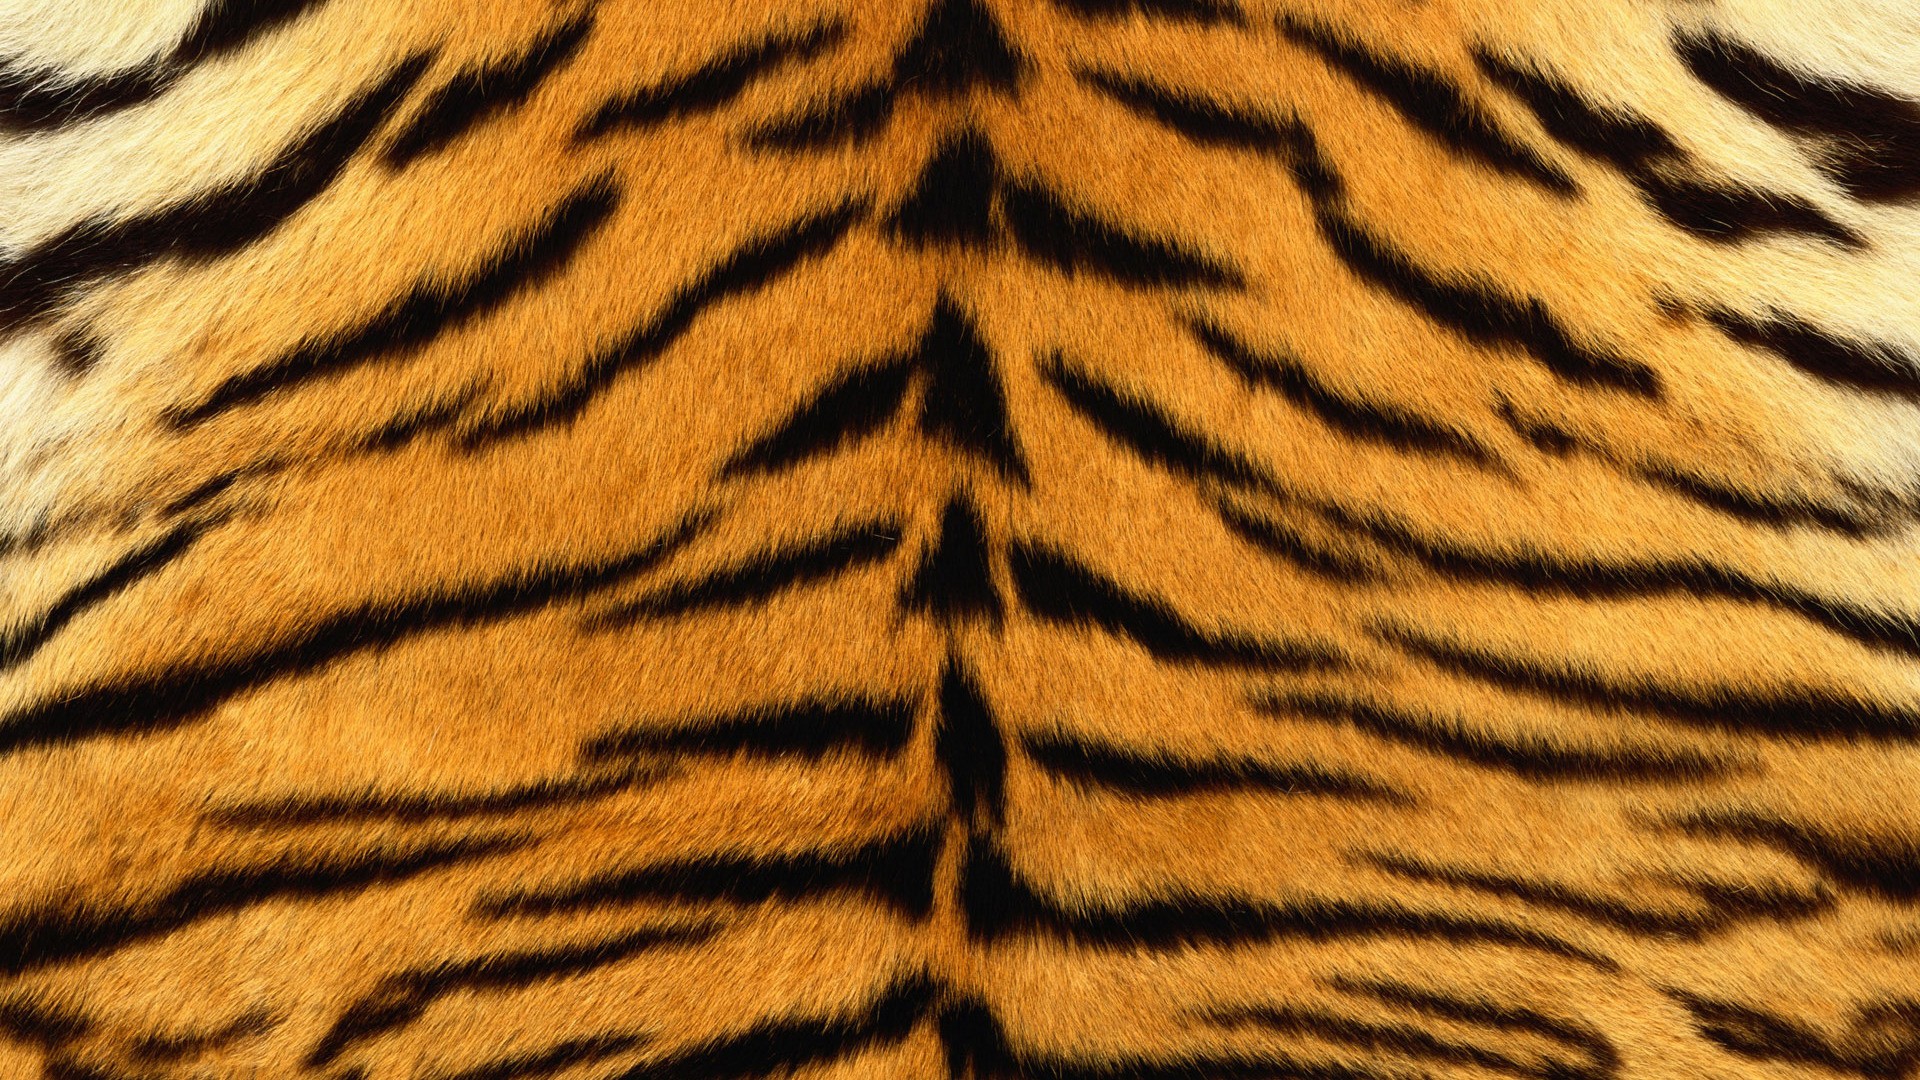 Download Tigers Fur Wallpaper 1920x1080 | Wallpoper #310860